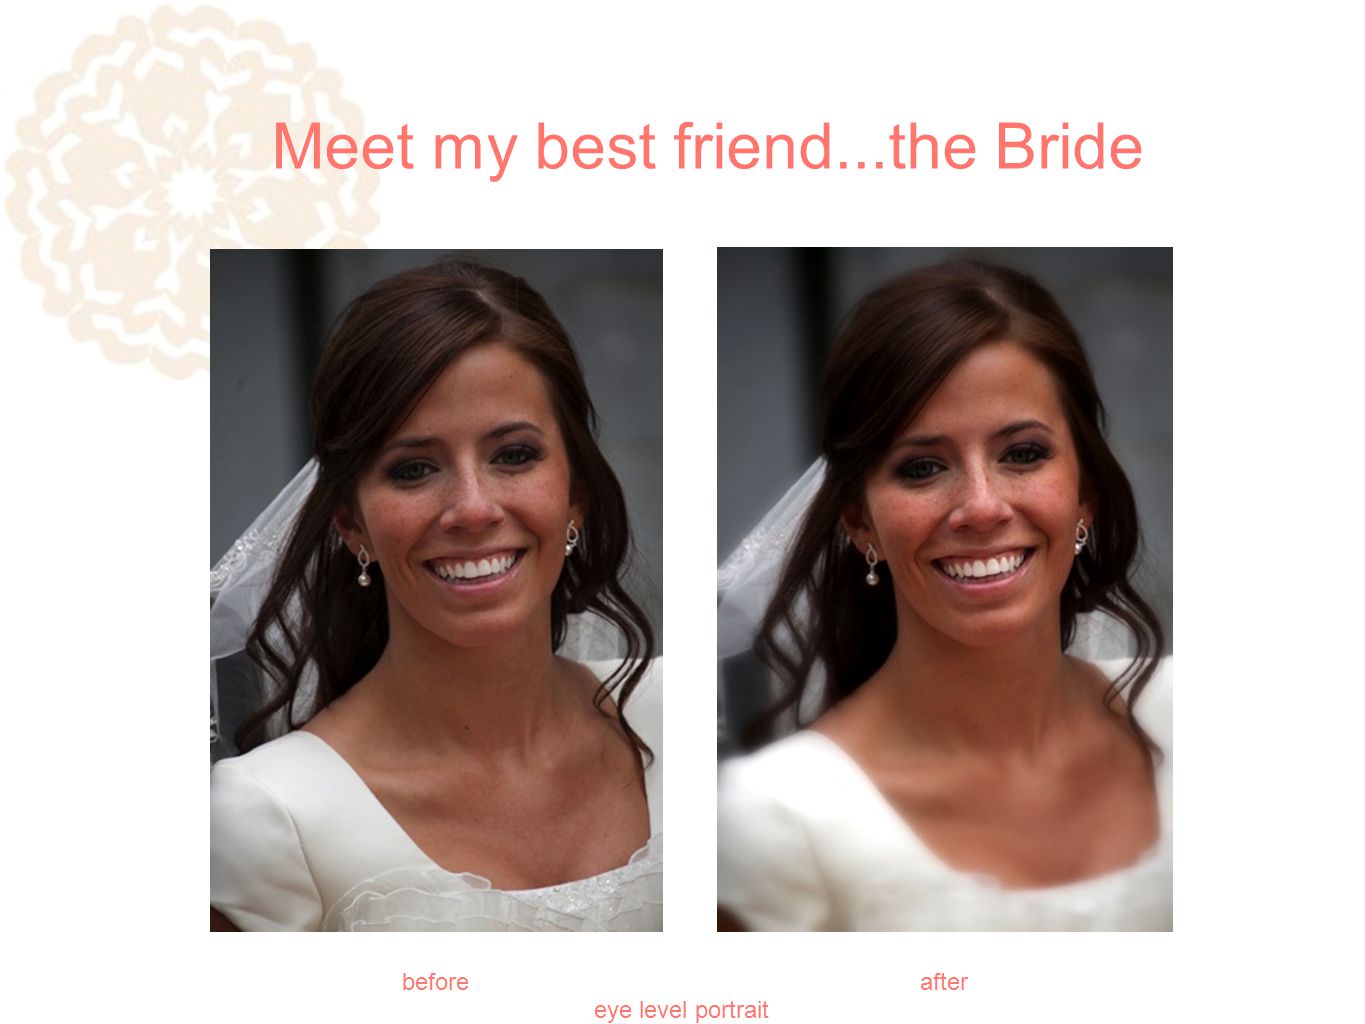 Meet my best friend...the Bride beforeafter eye level portrait